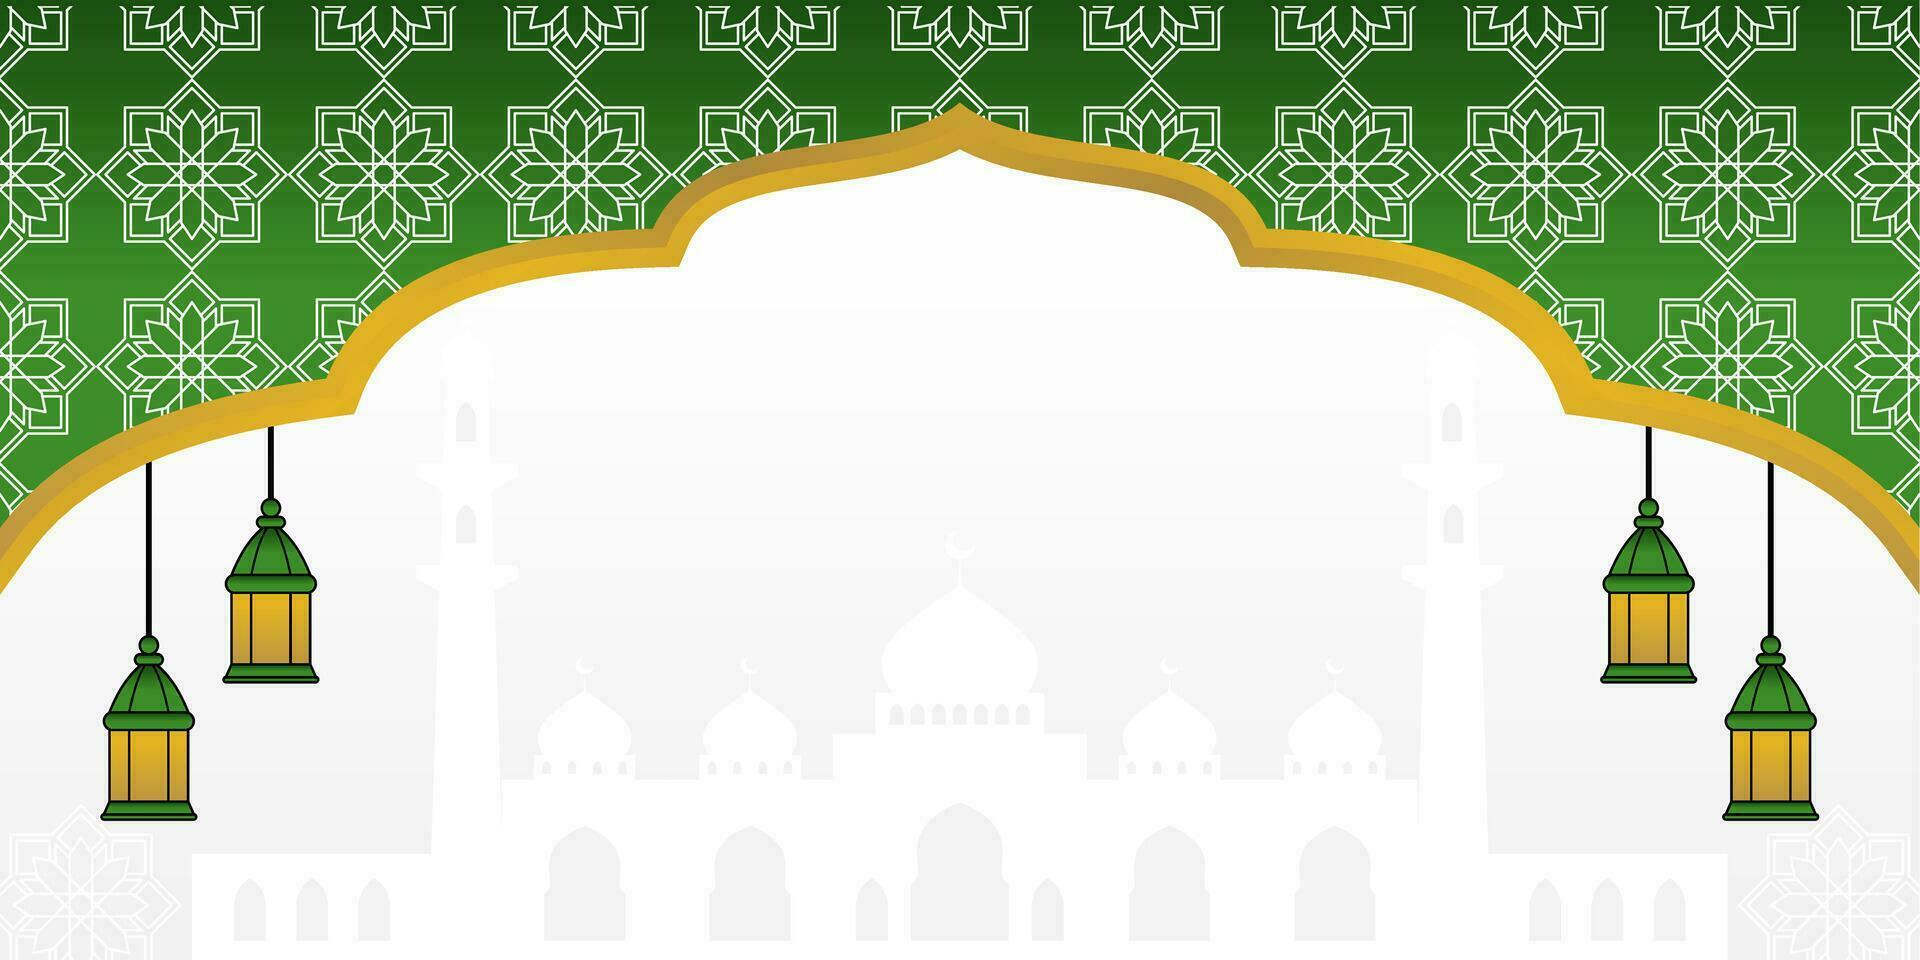 Green Islamic background, with lantern ornament, mandala and mosque silhouette. vector template for banner, greeting card for Islamic holidays, eid al-fitr, ramadan, eid al-adha